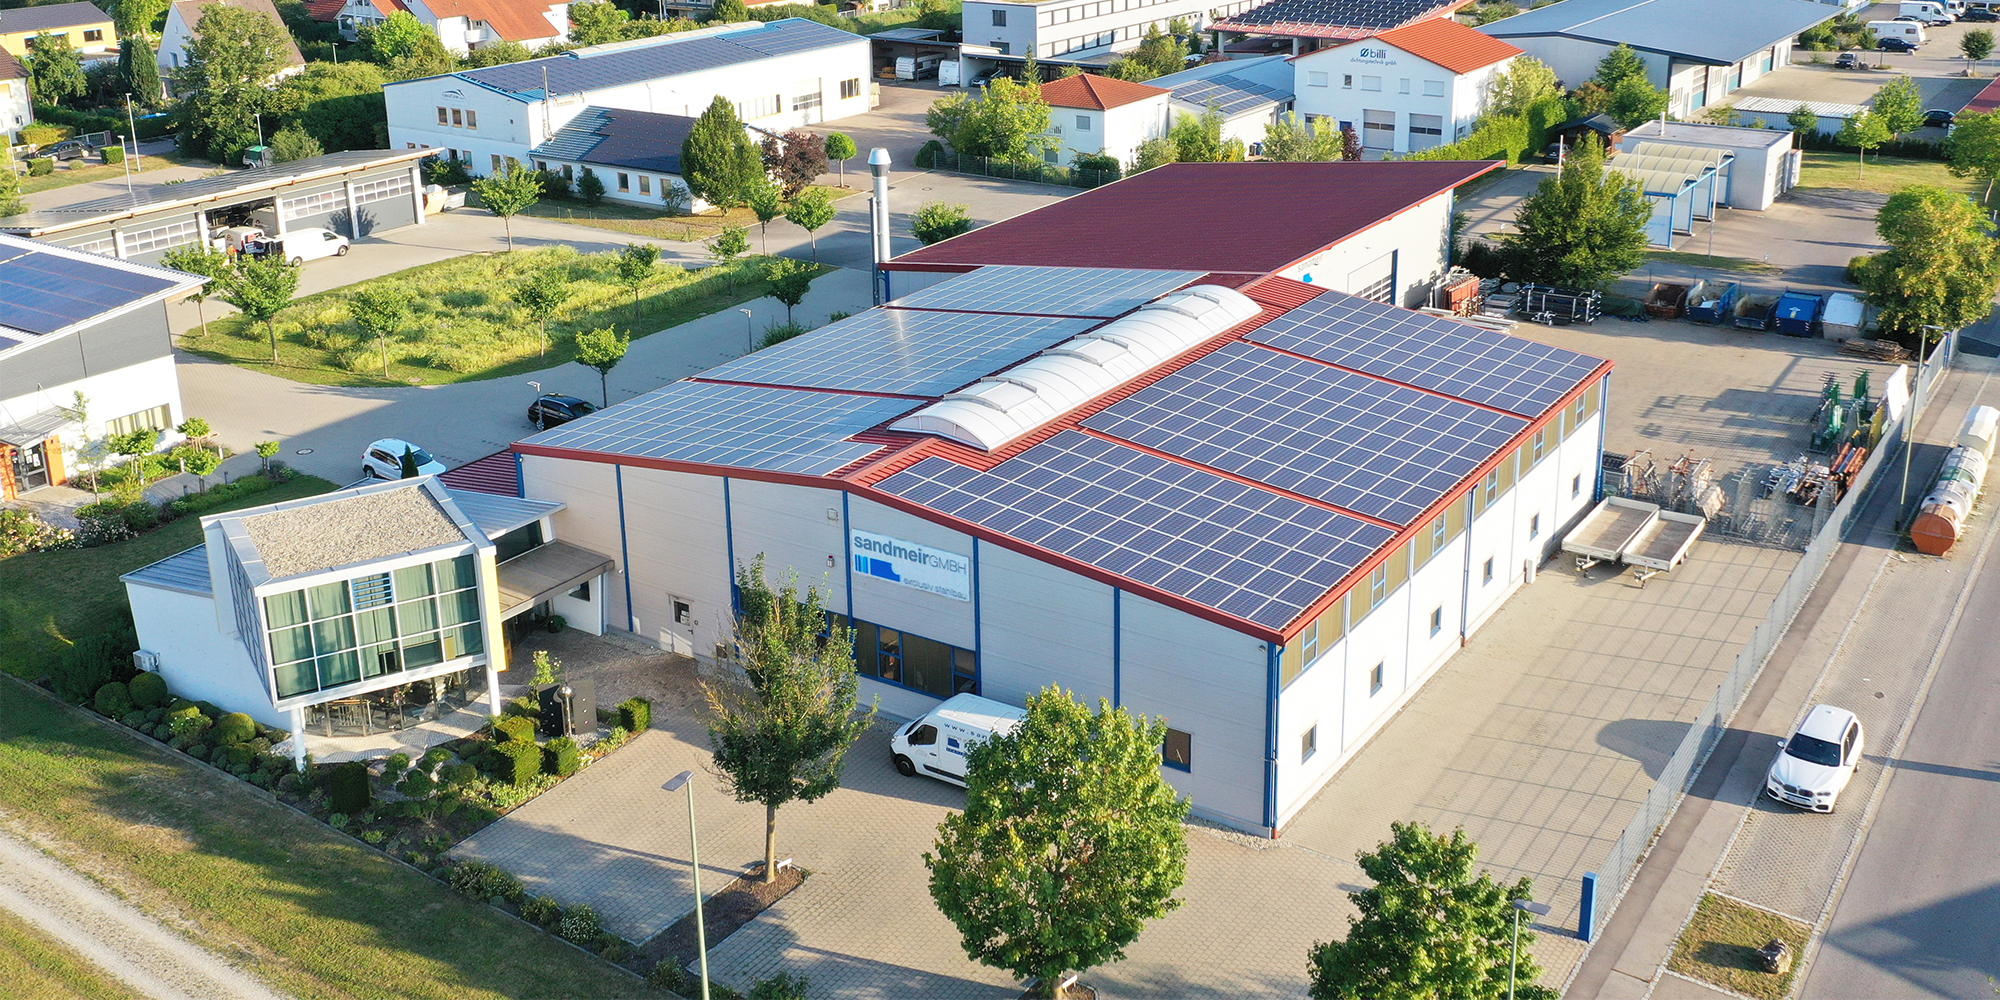 Standort Sandmeir - exclusiv Stahlbau GmbH